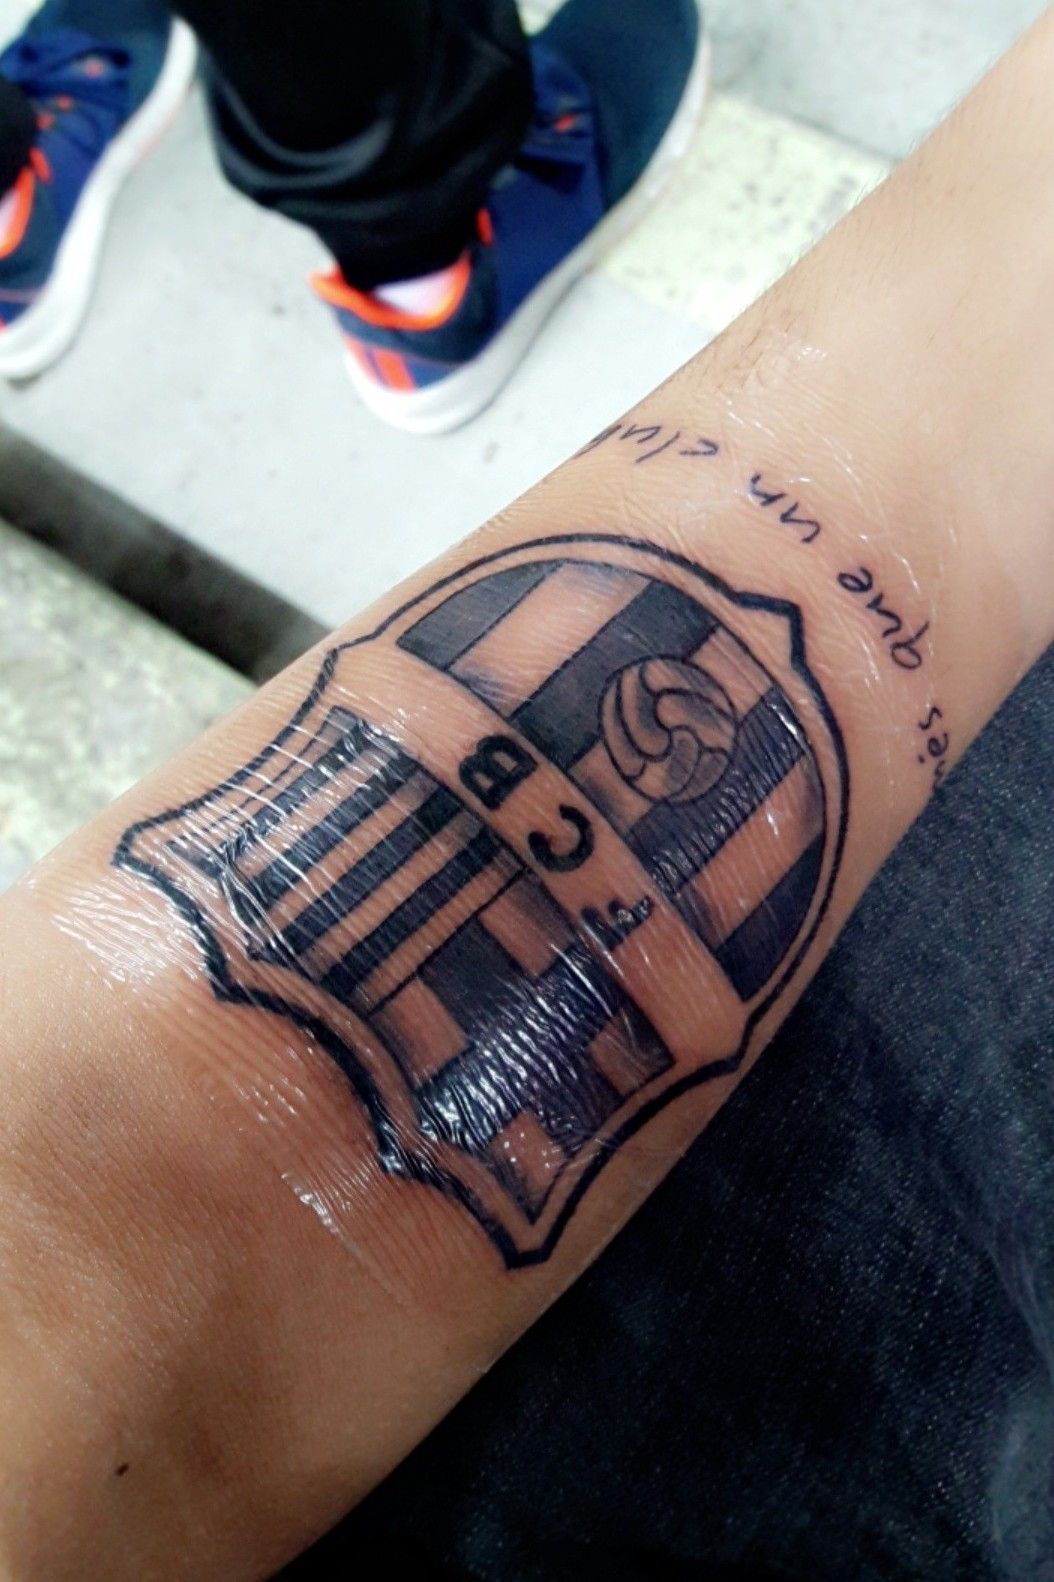 Tattoo uploaded by Nischal Shrestha • At Barcelona of Fc Barcelona. • Tattoodo